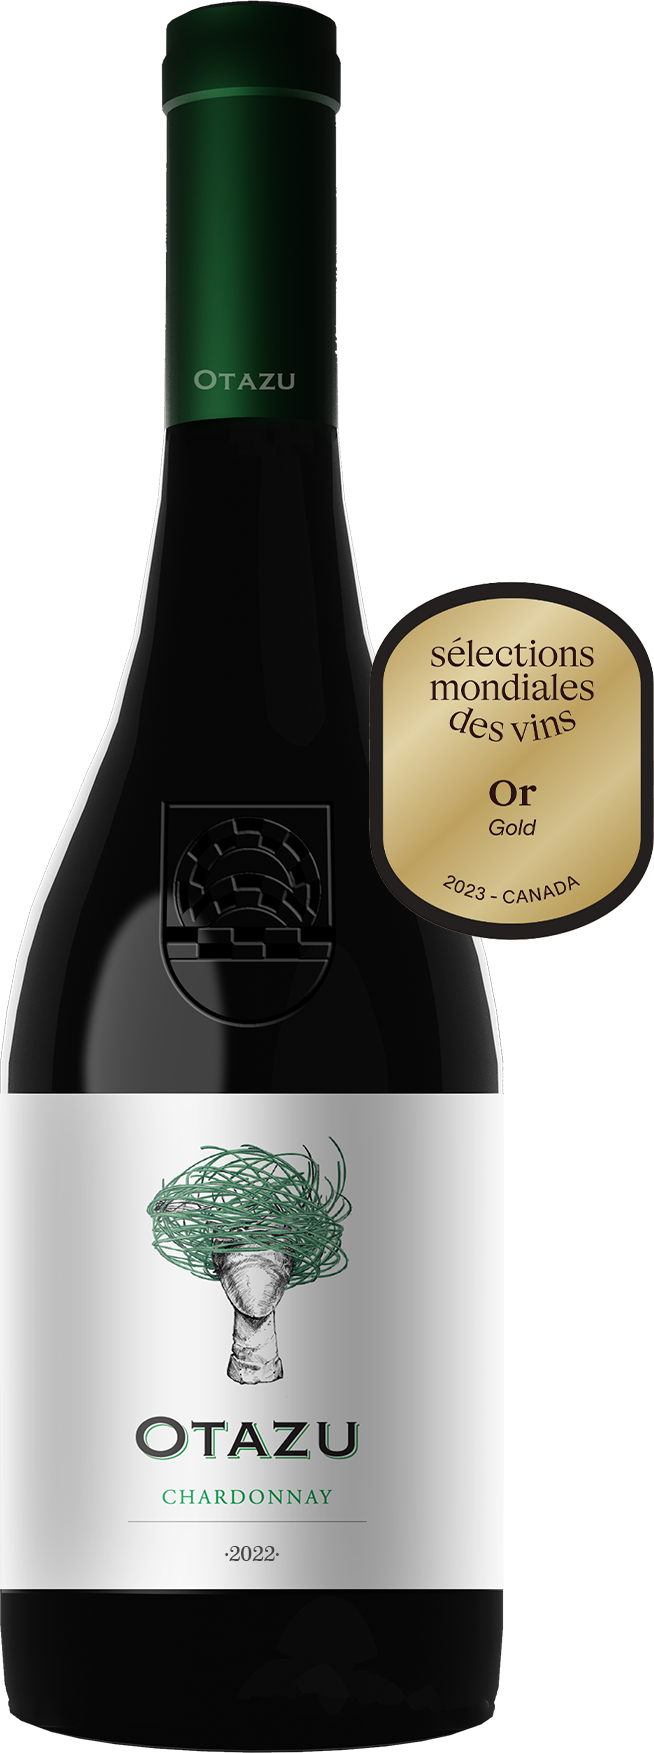 | Agency Bodega Spain & - Wine - Spirit Chardonnay Otazu - Valmonti